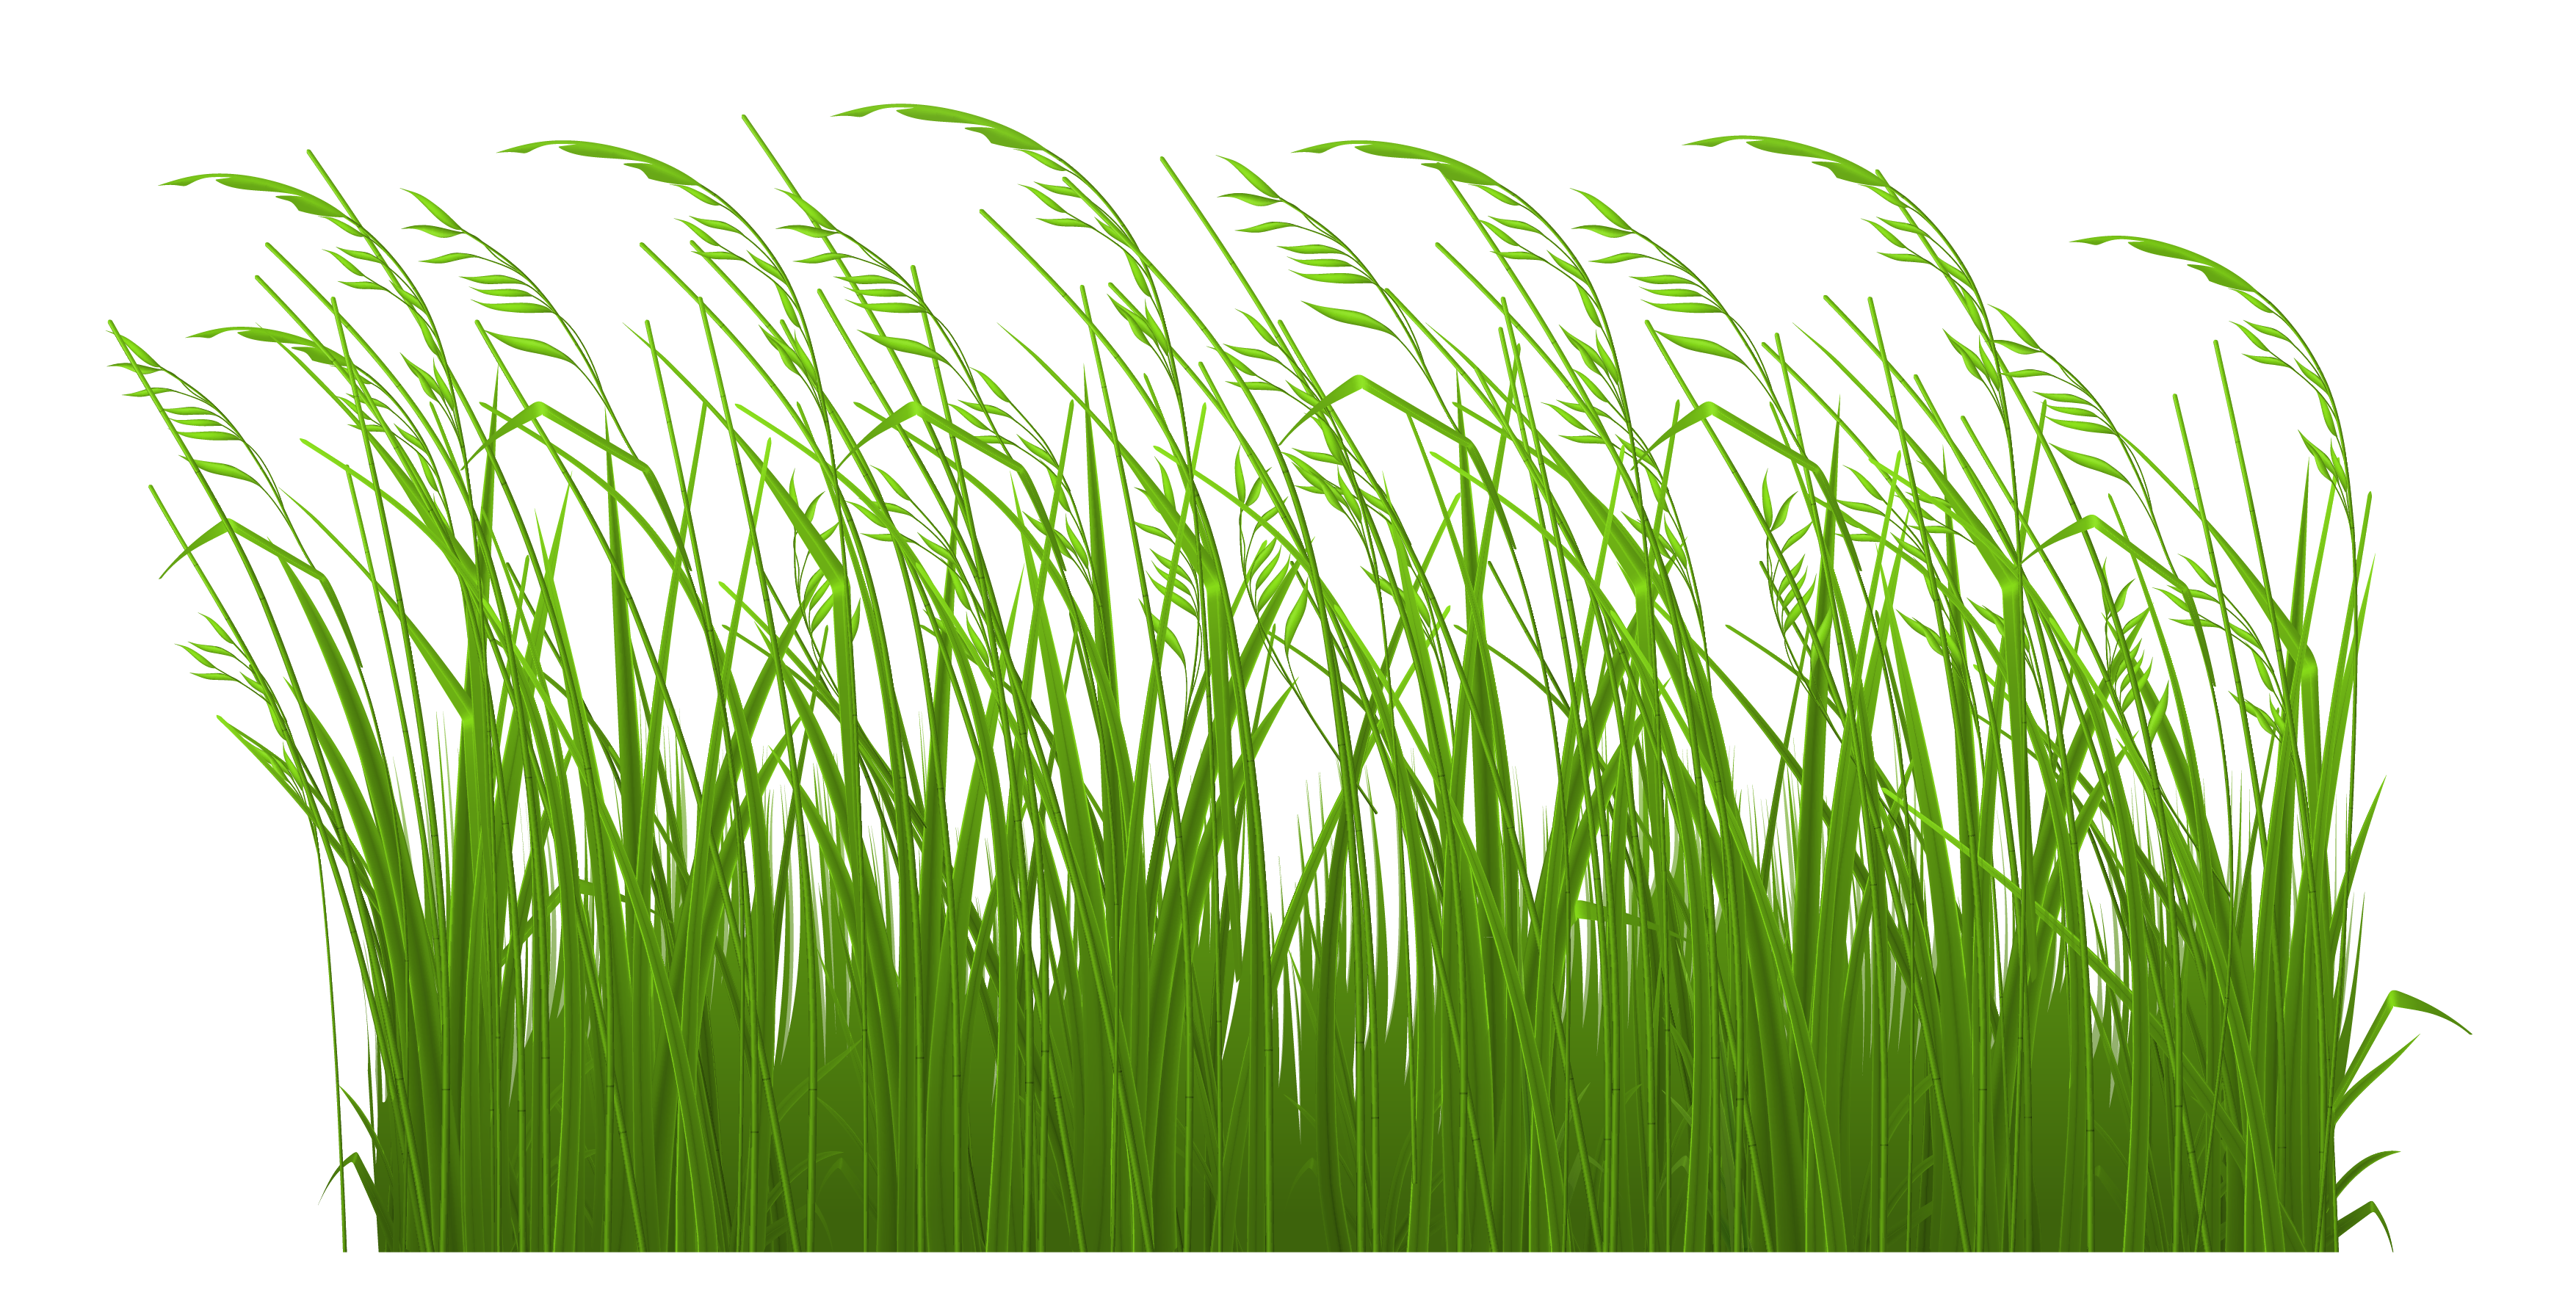 Crops clipart wheat grass, Crops wheat grass Transparent